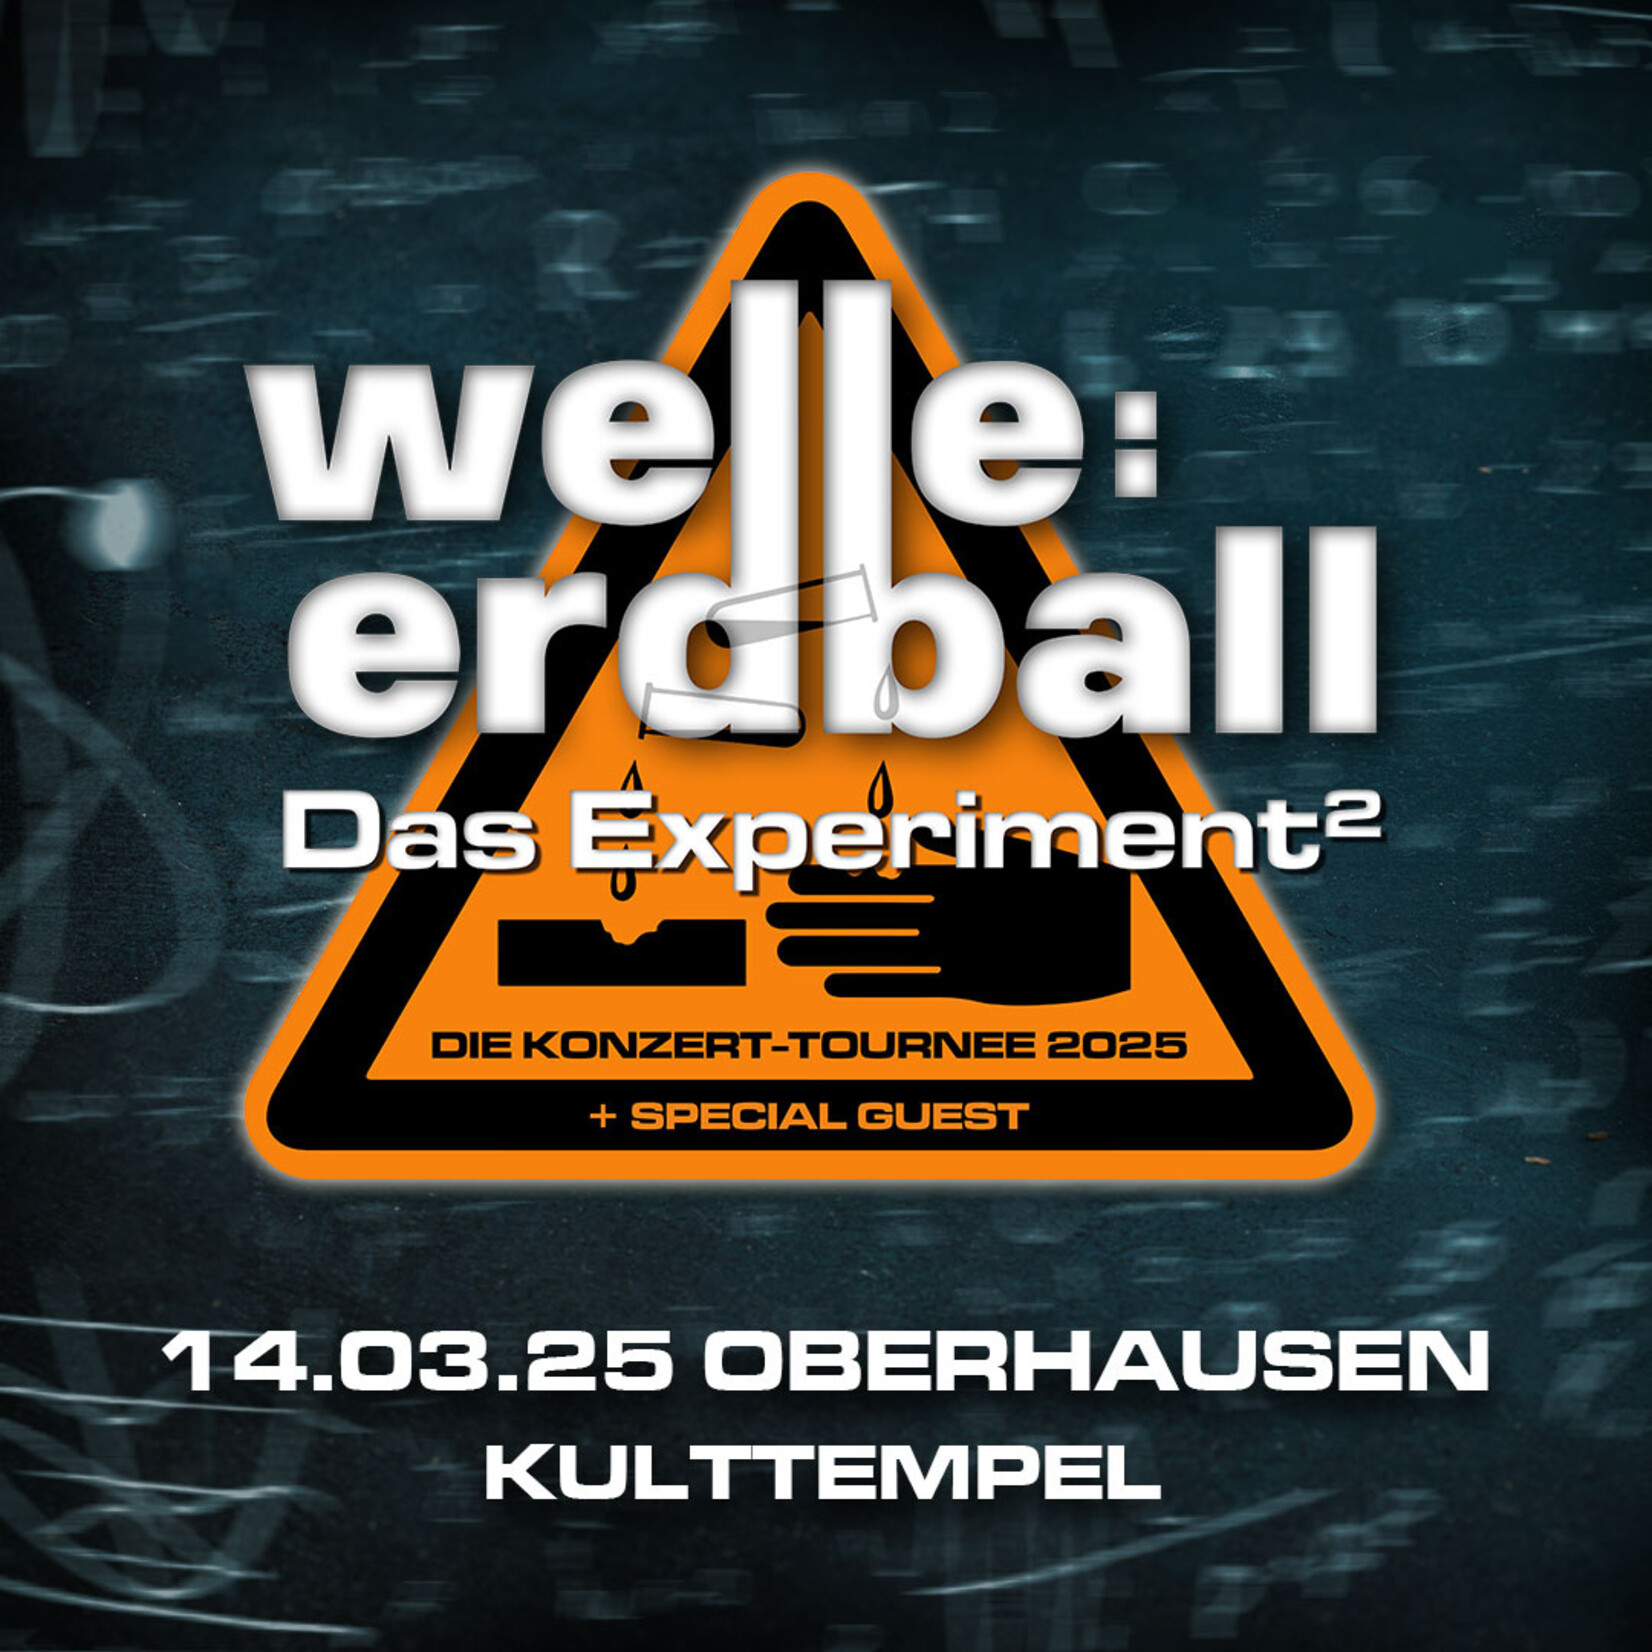 14.03.2025 - OBERHAUSEN - WELLE:ERDBALL - DAS EXPERIMENT²